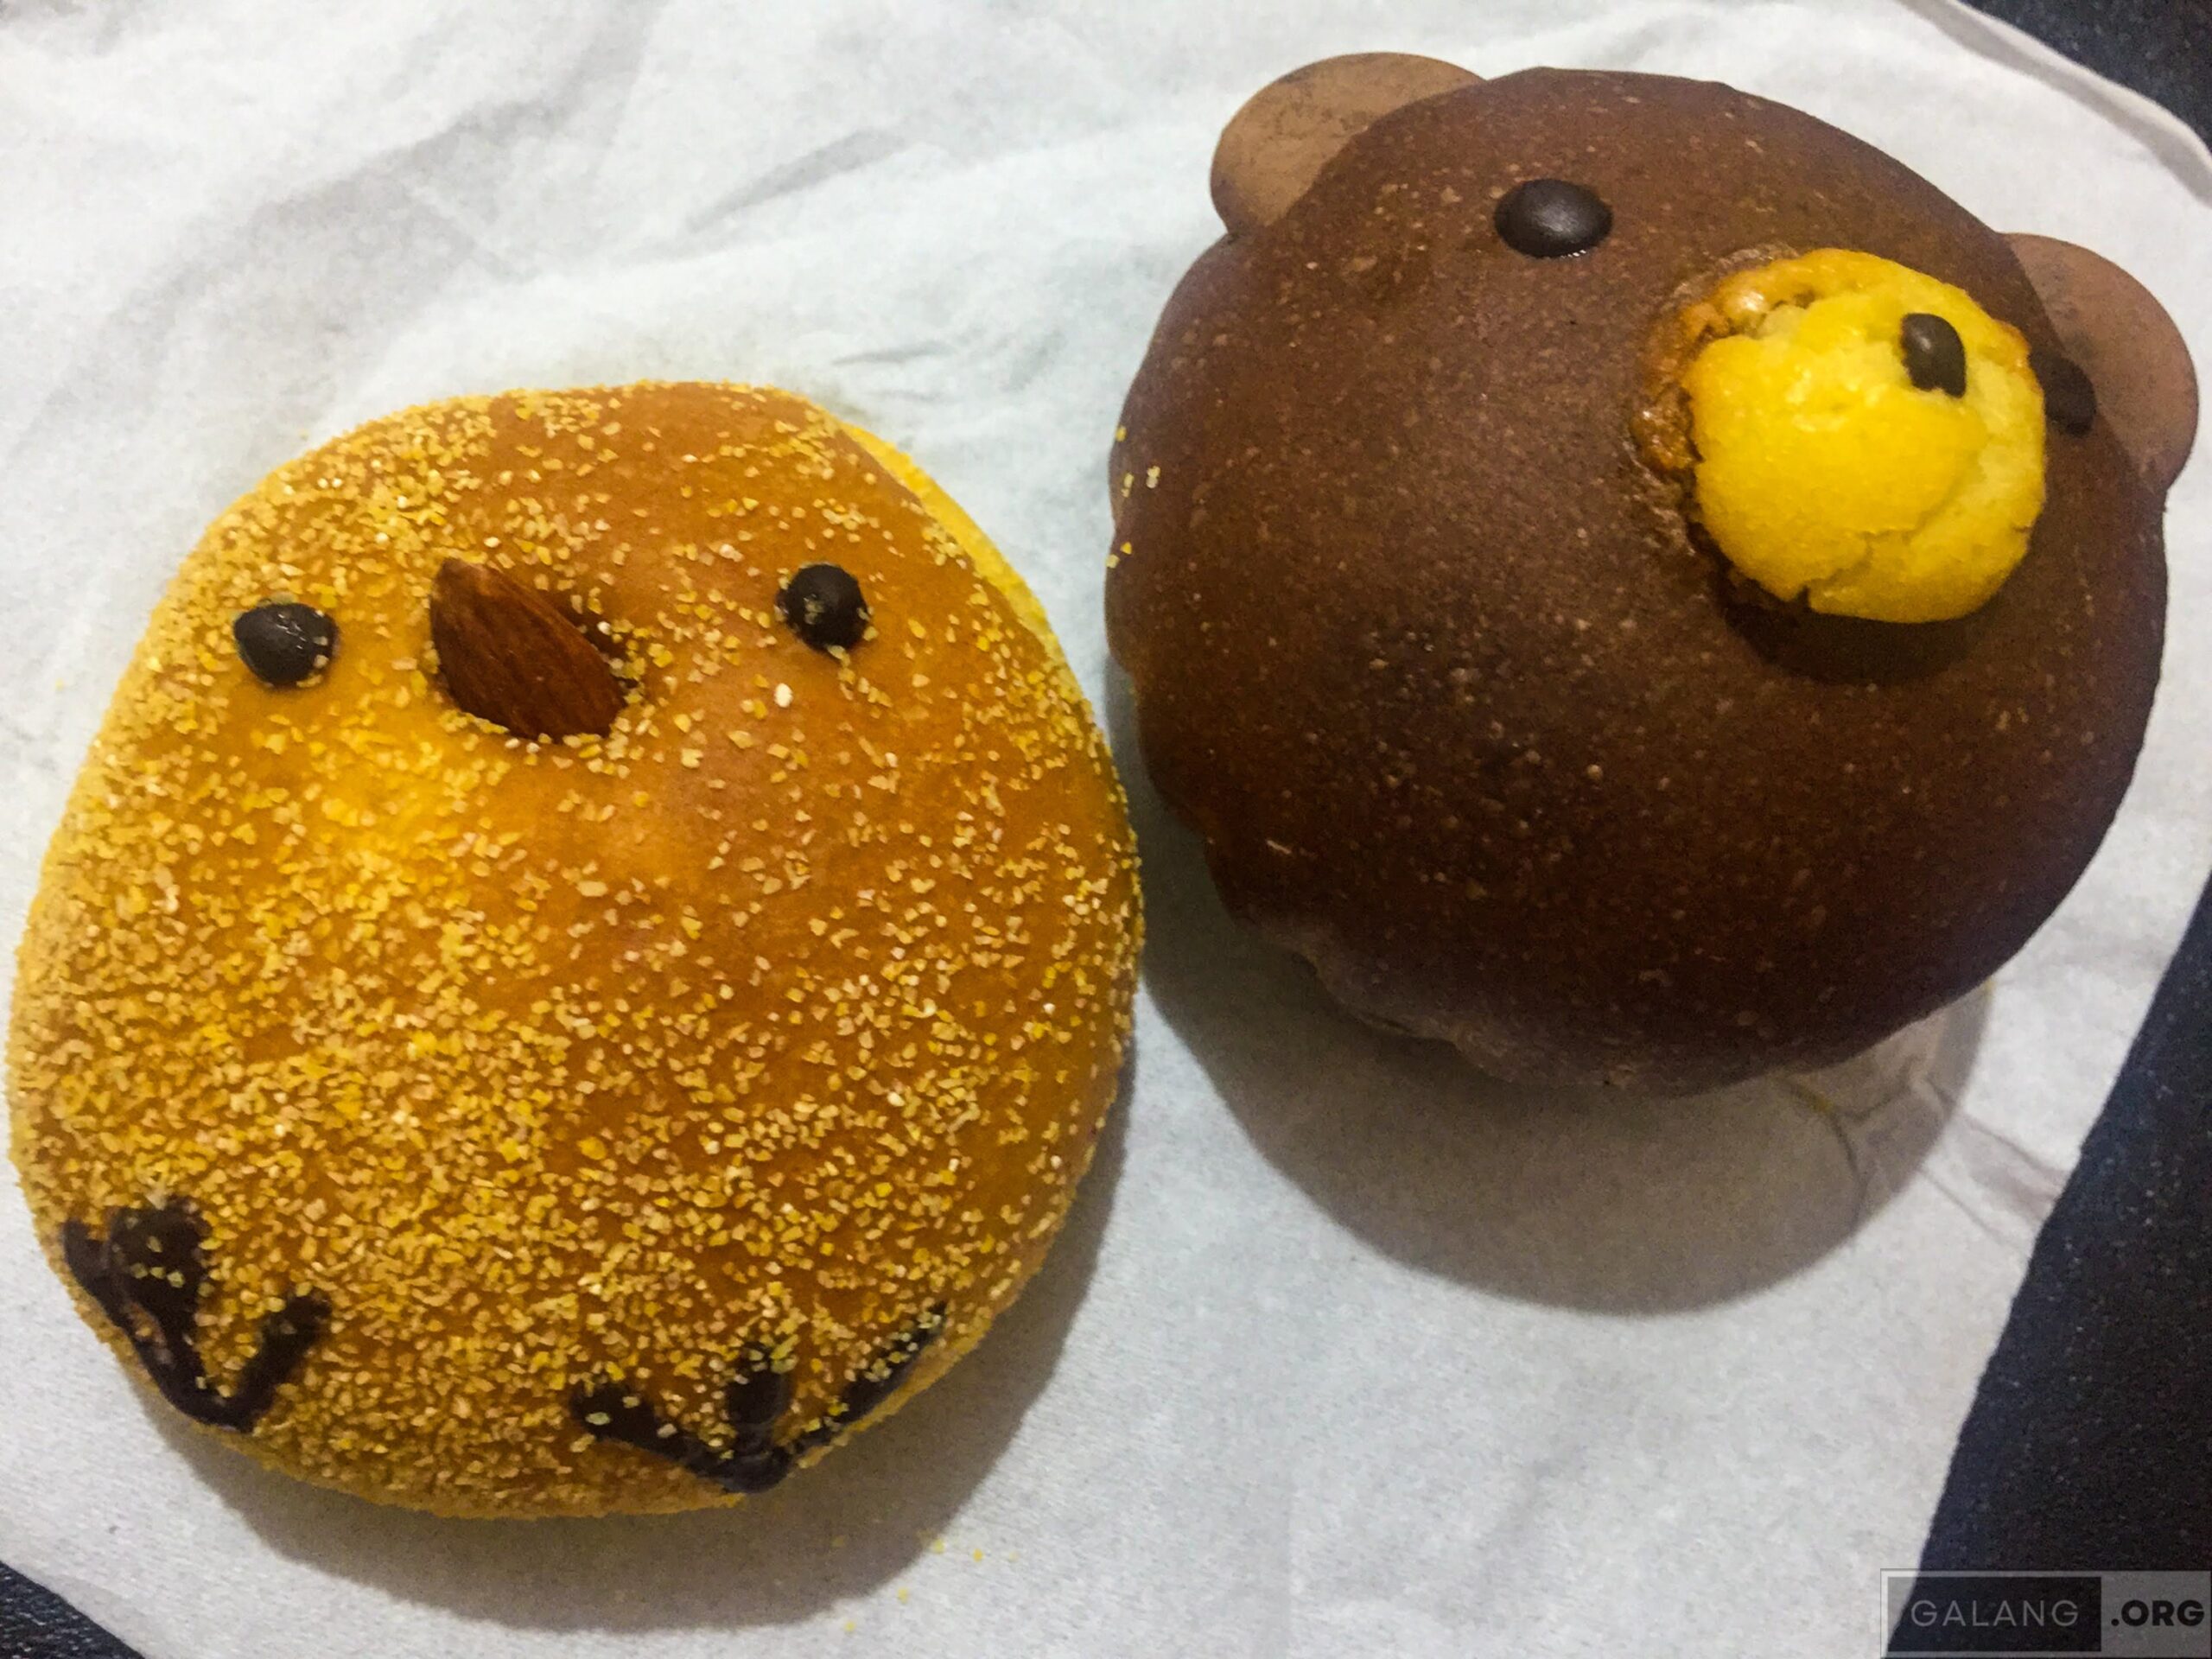 Bird and bear bread